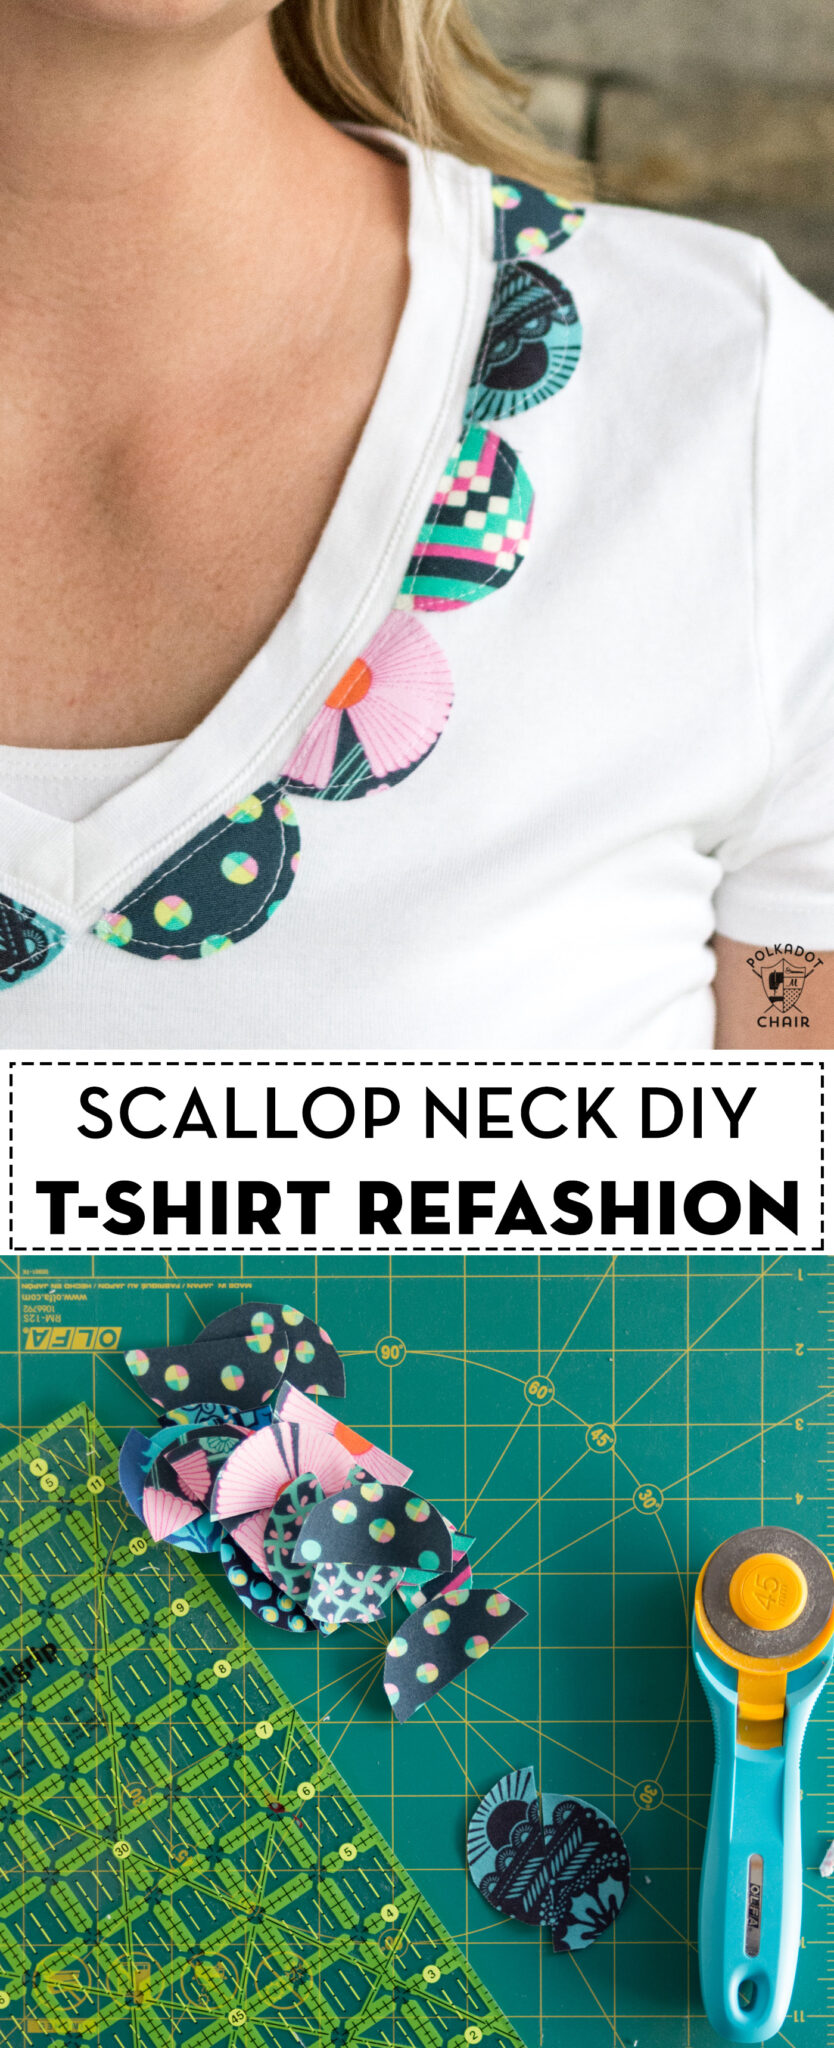 Scallop Neck DIY T-Shirt Refashion Project | Polka Dot Chair